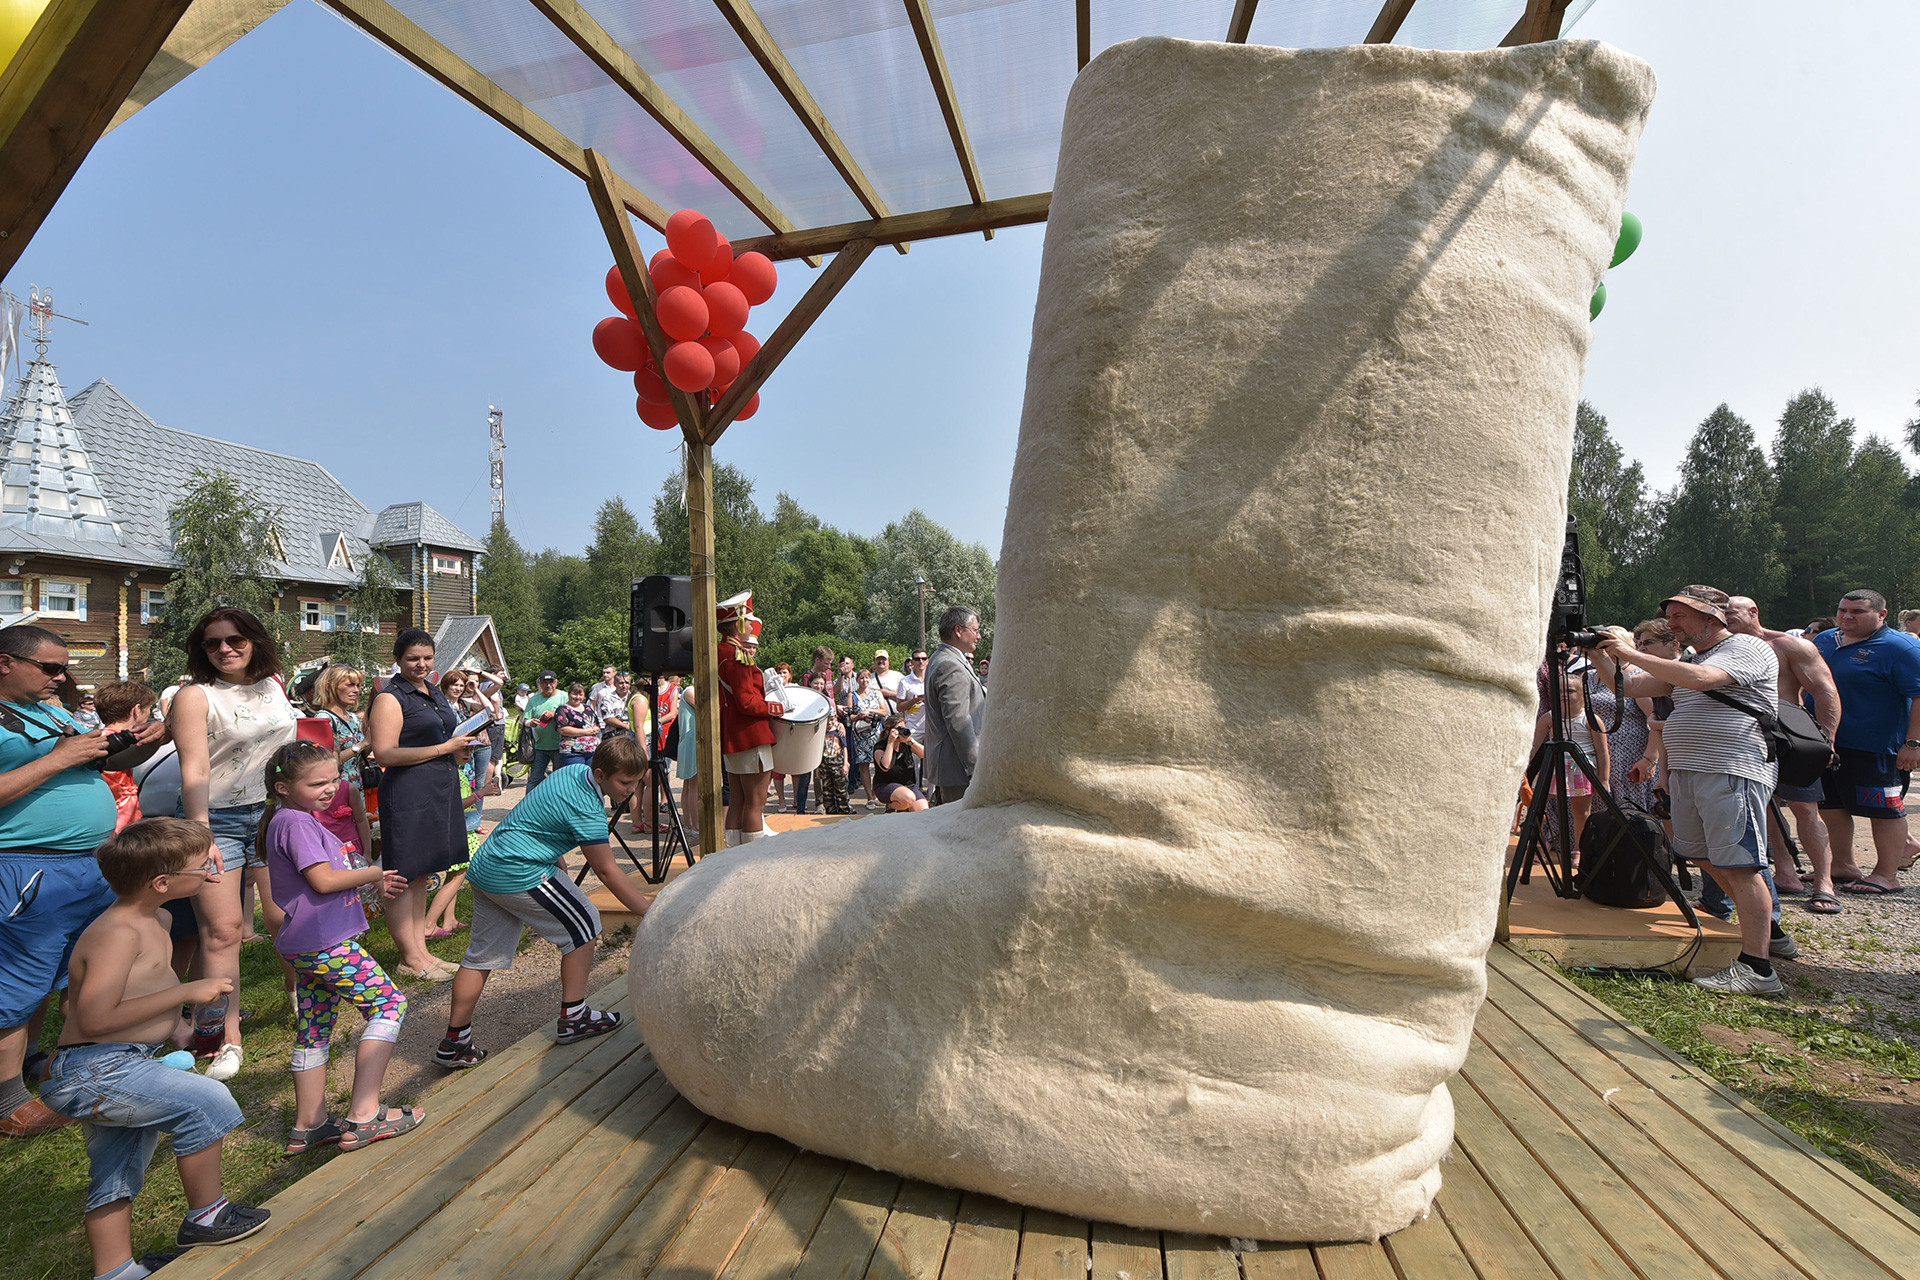 People look at a giant valenki boot made by artist Valeria Loshak